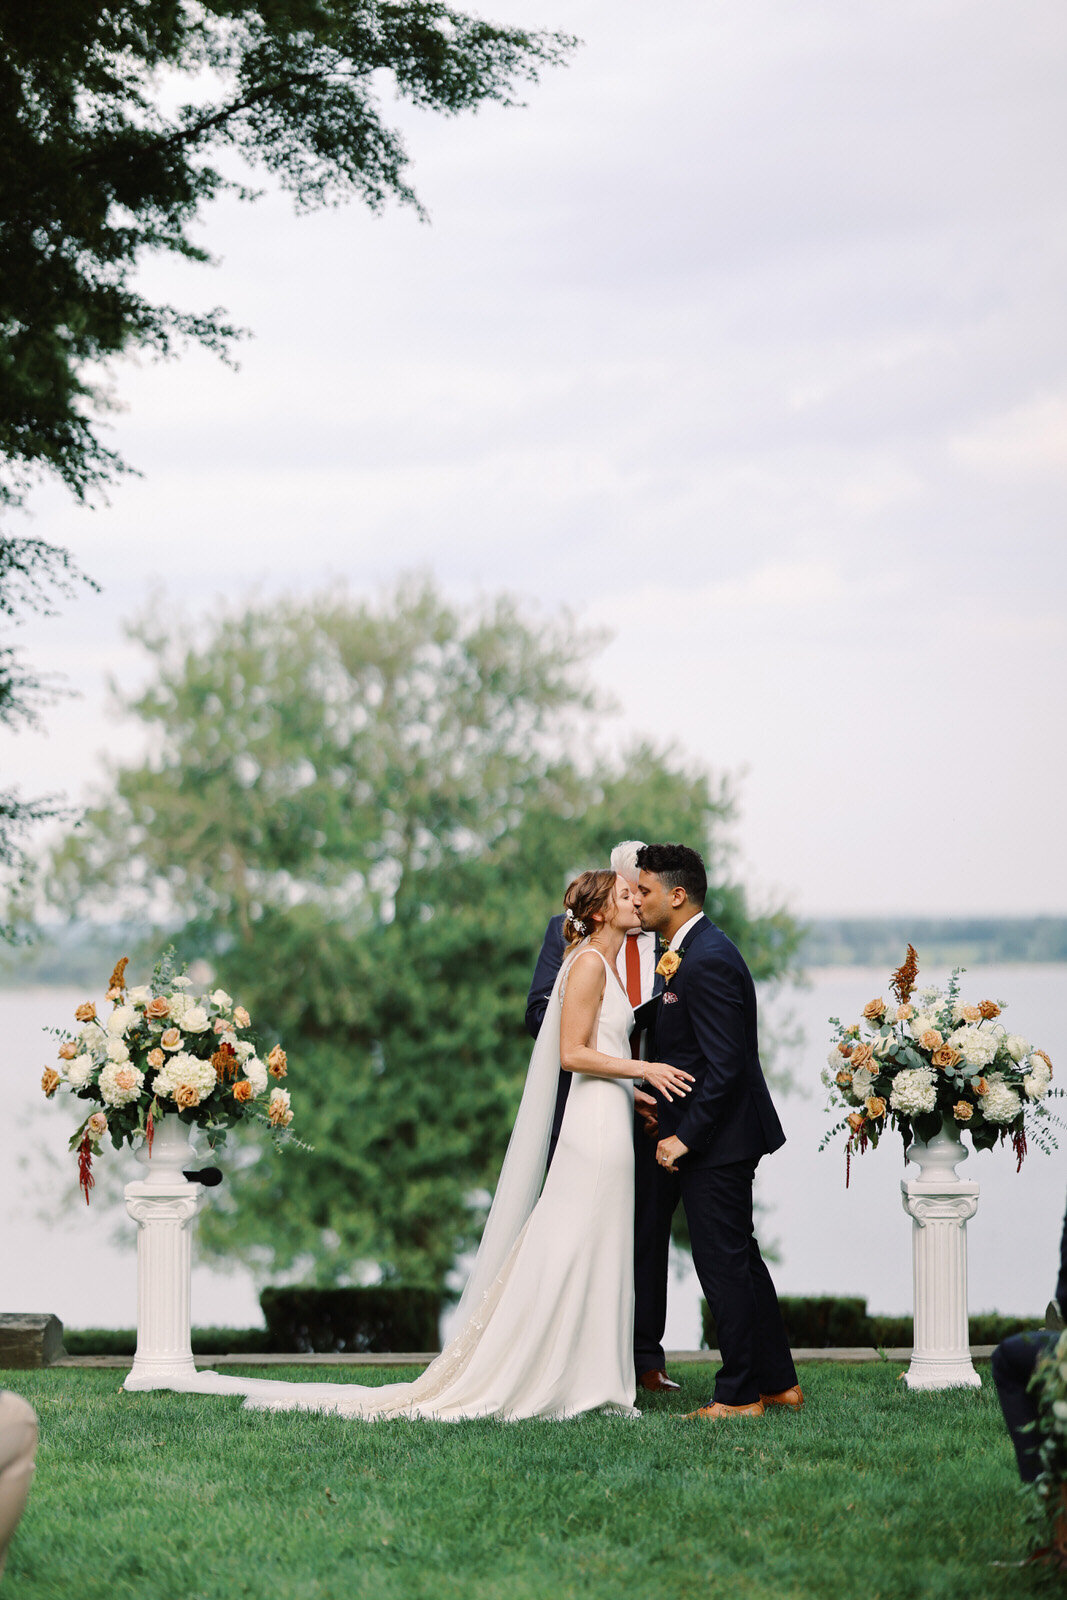 Chic and modern wedding photography during an elegant wedding in Rhode Island